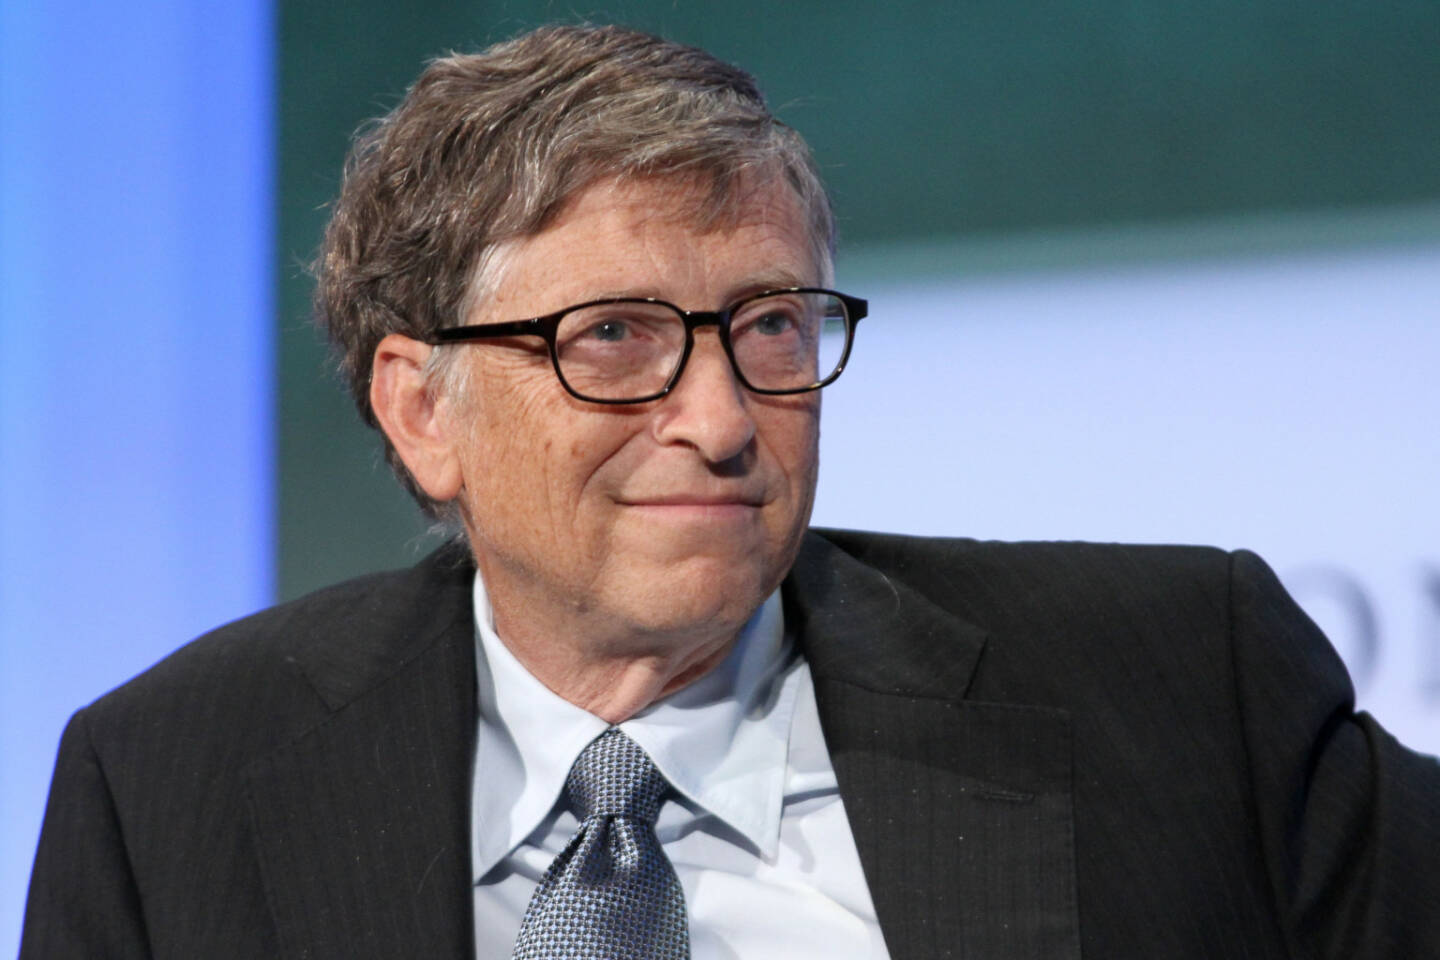 Bill Gates, Microsoft Gründer <a href=http://www.shutterstock.com/gallery-1803410p1.html?cr=00&pl=edit-00>JStone</a> / <a href=http://www.shutterstock.com/?cr=00&pl=edit-00>Shutterstock.com</a>